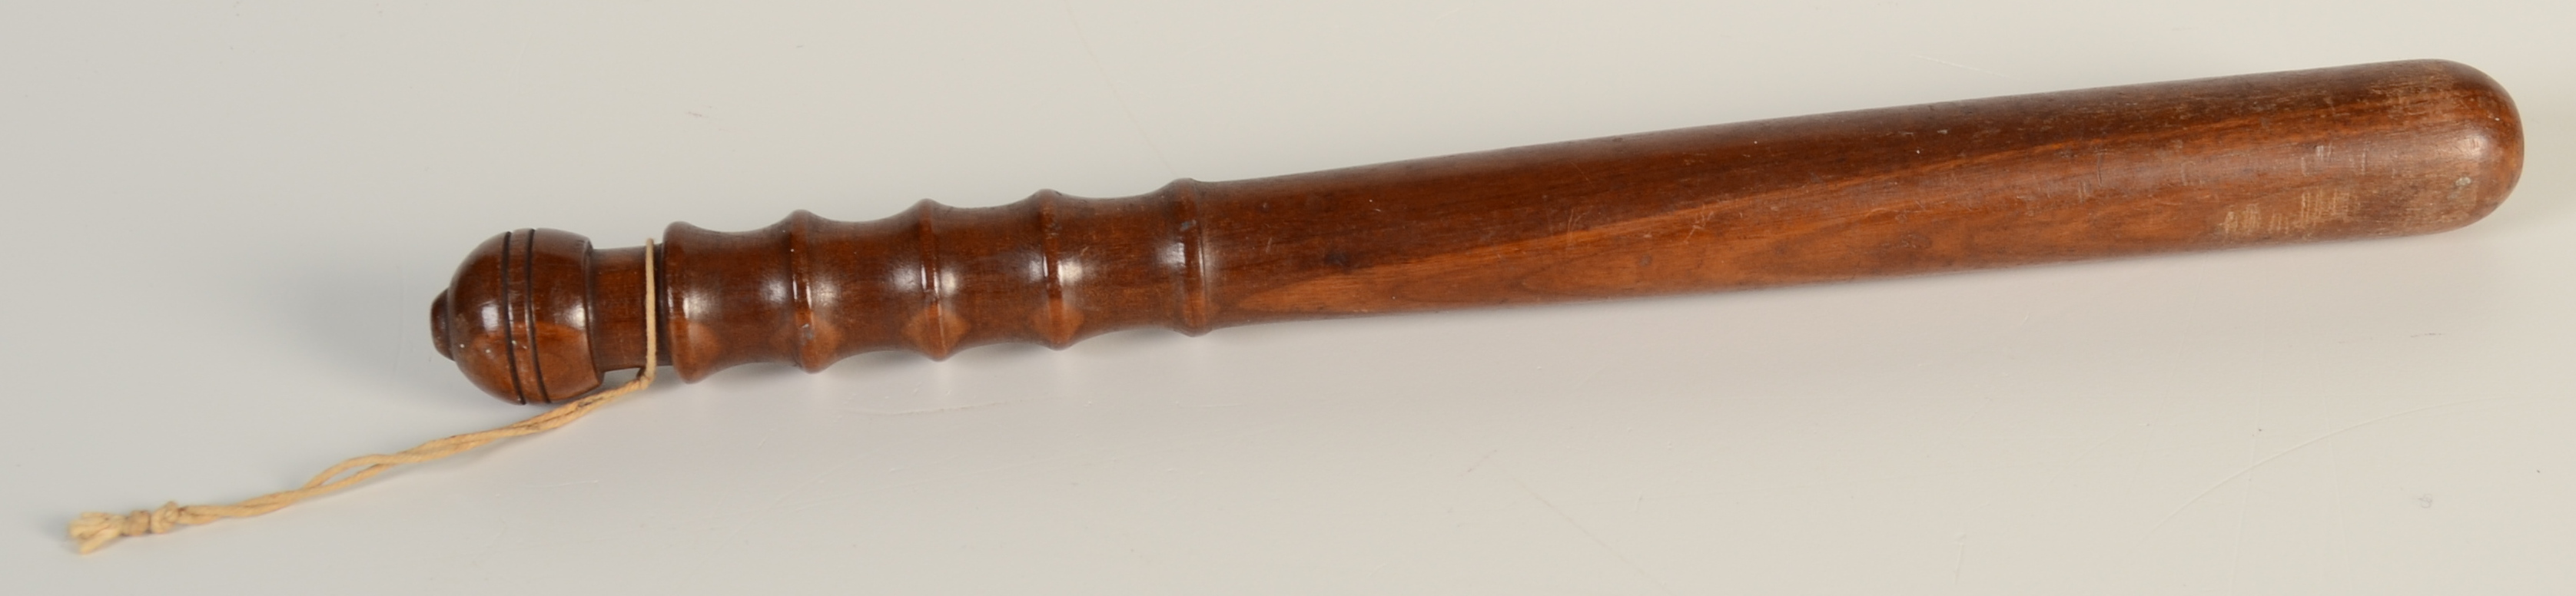 A turned lingnum vitae truncheon, length 39cm.